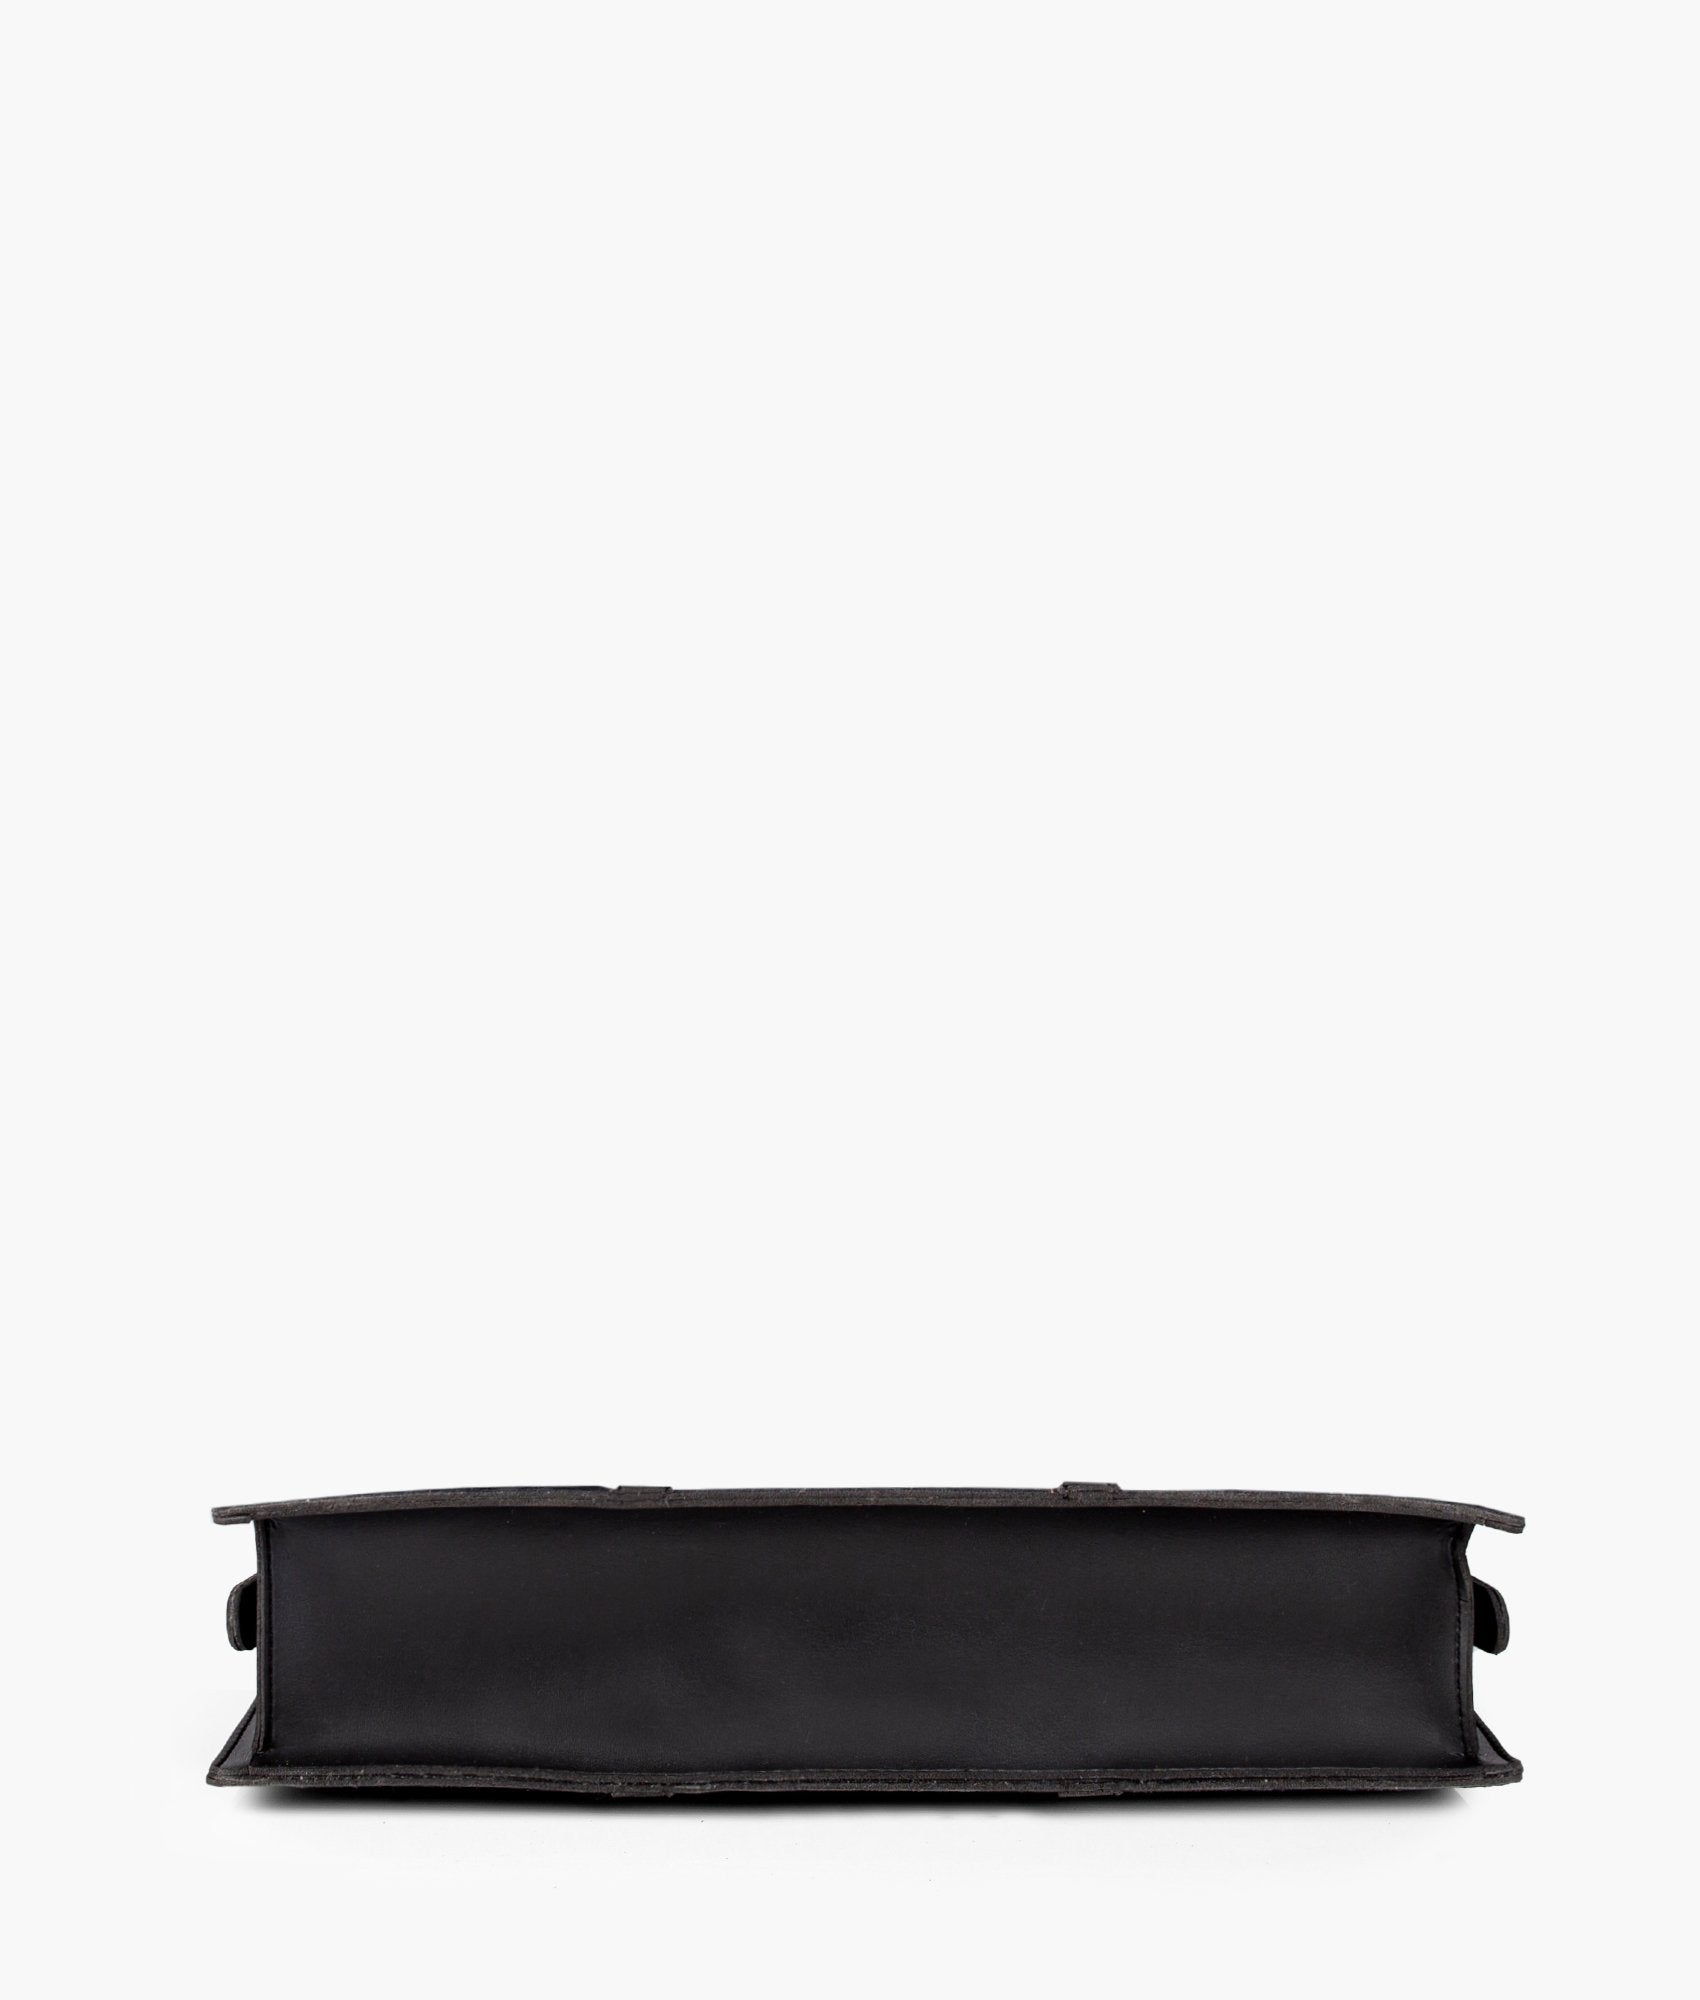 Black suede laptop bag